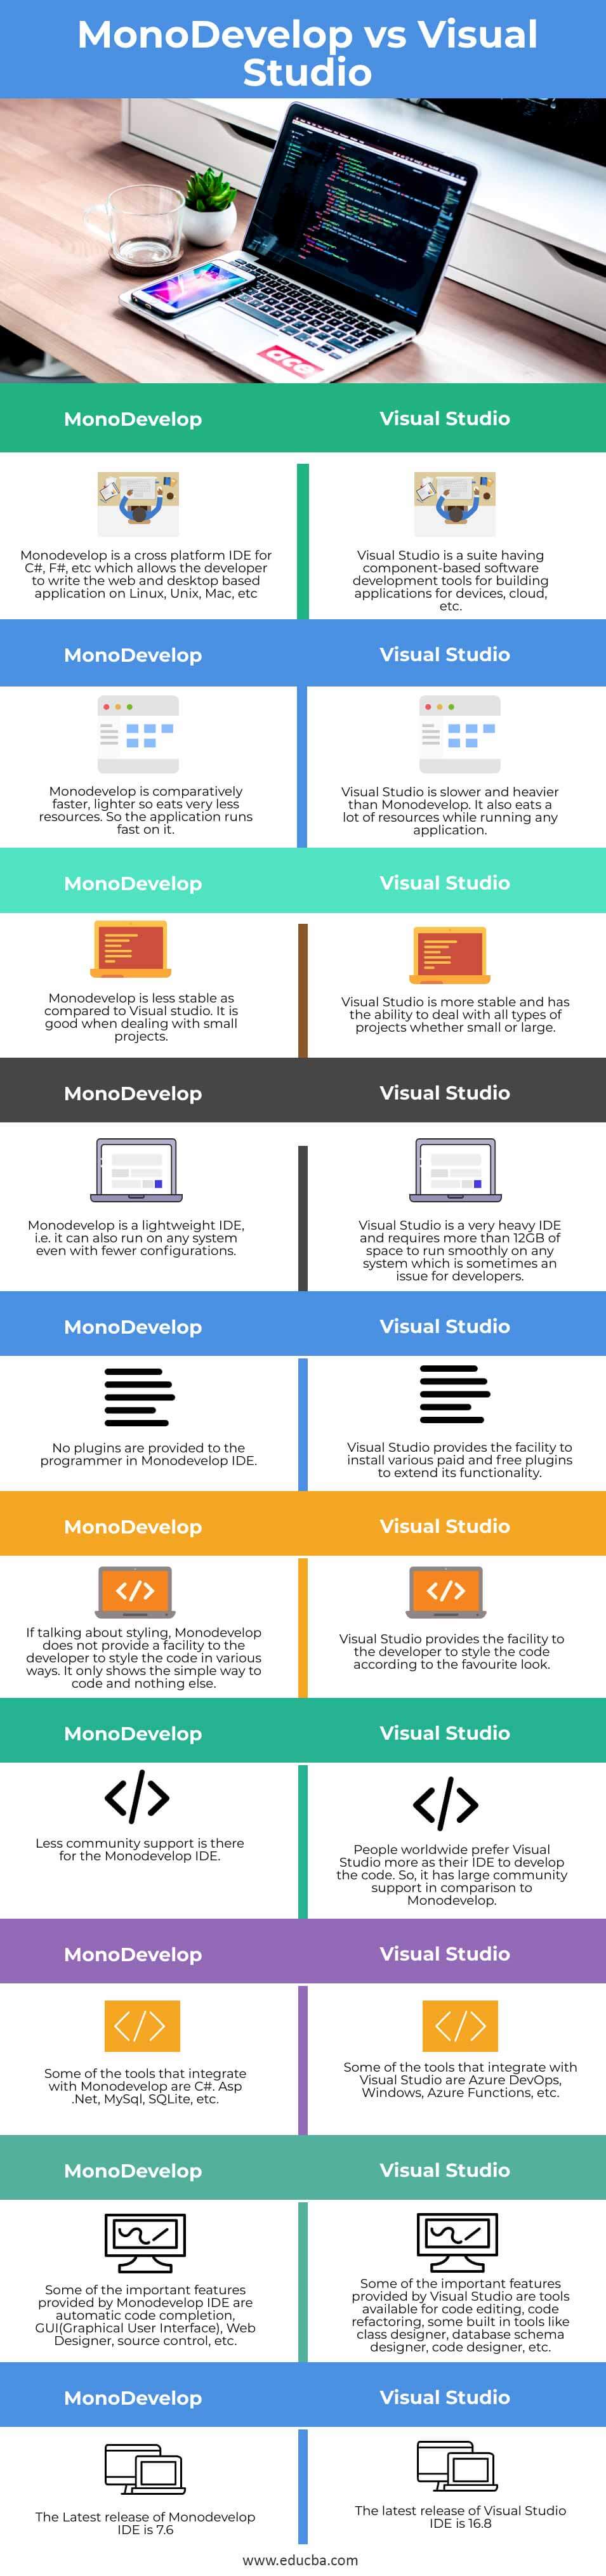 MonoDevelop-vs-Visual-Studio-info